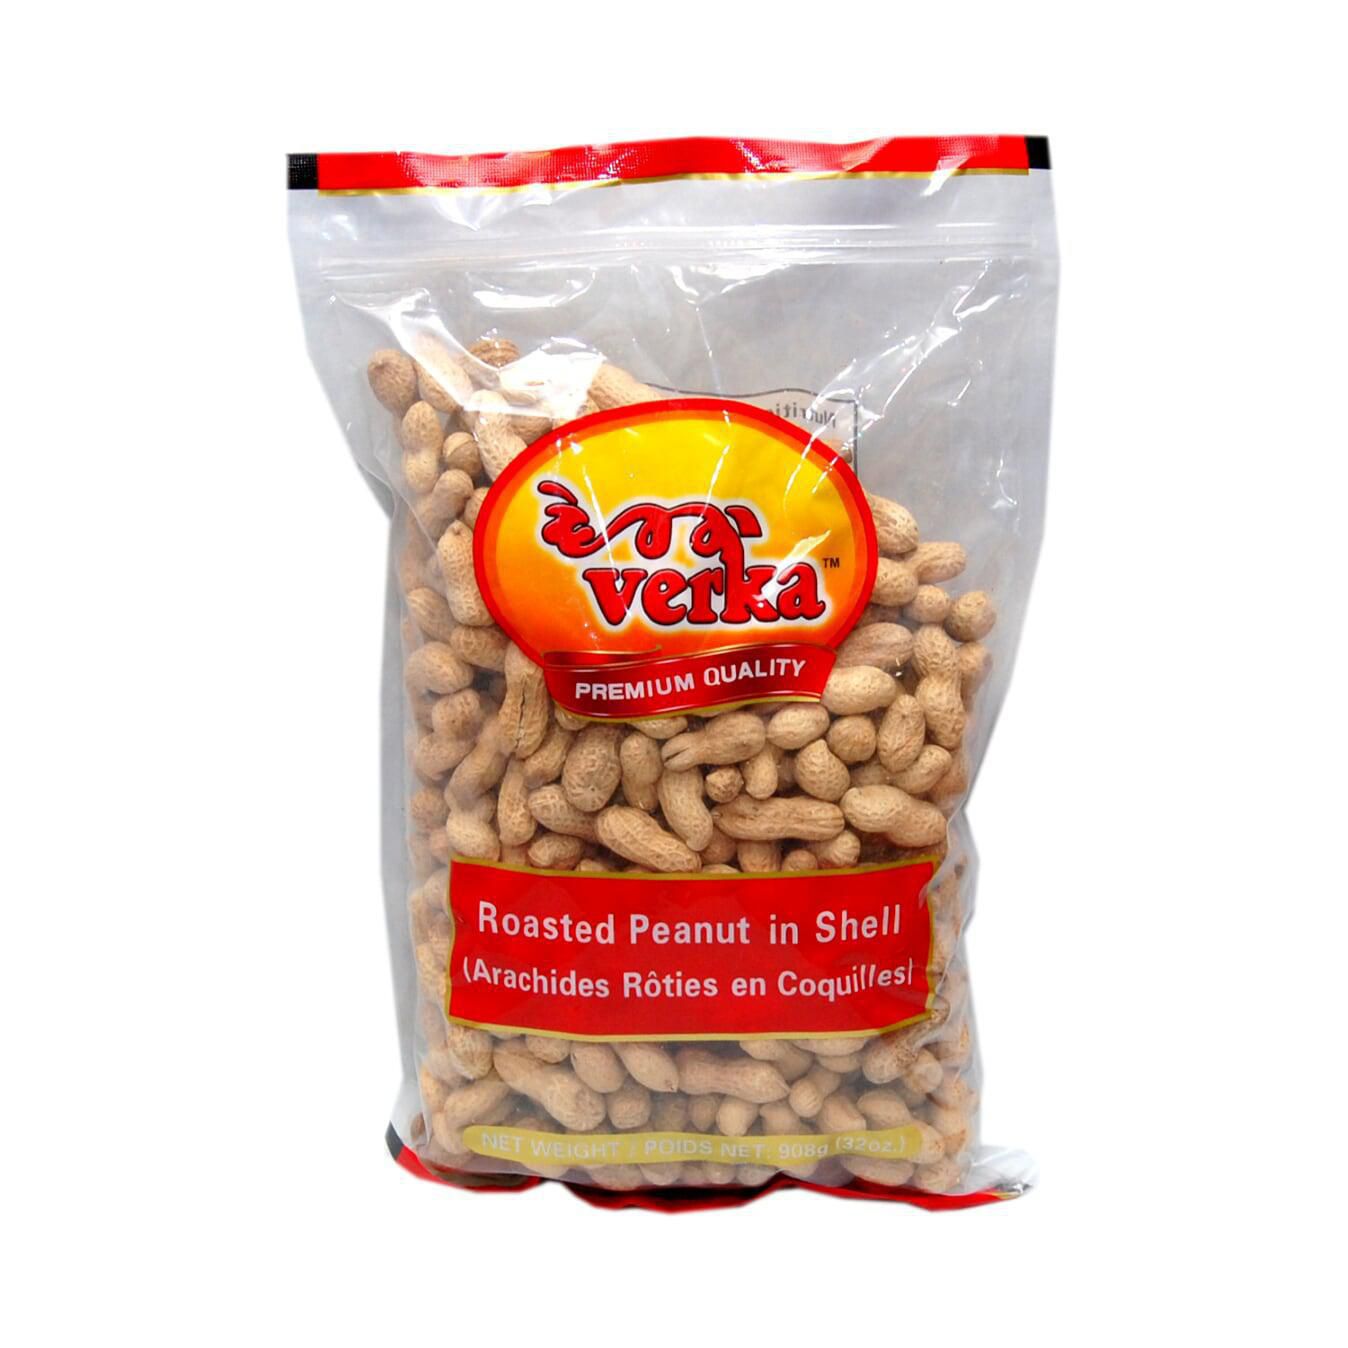 Verka Premium Quality Roasted Peanut in Shell | Walmart Canada